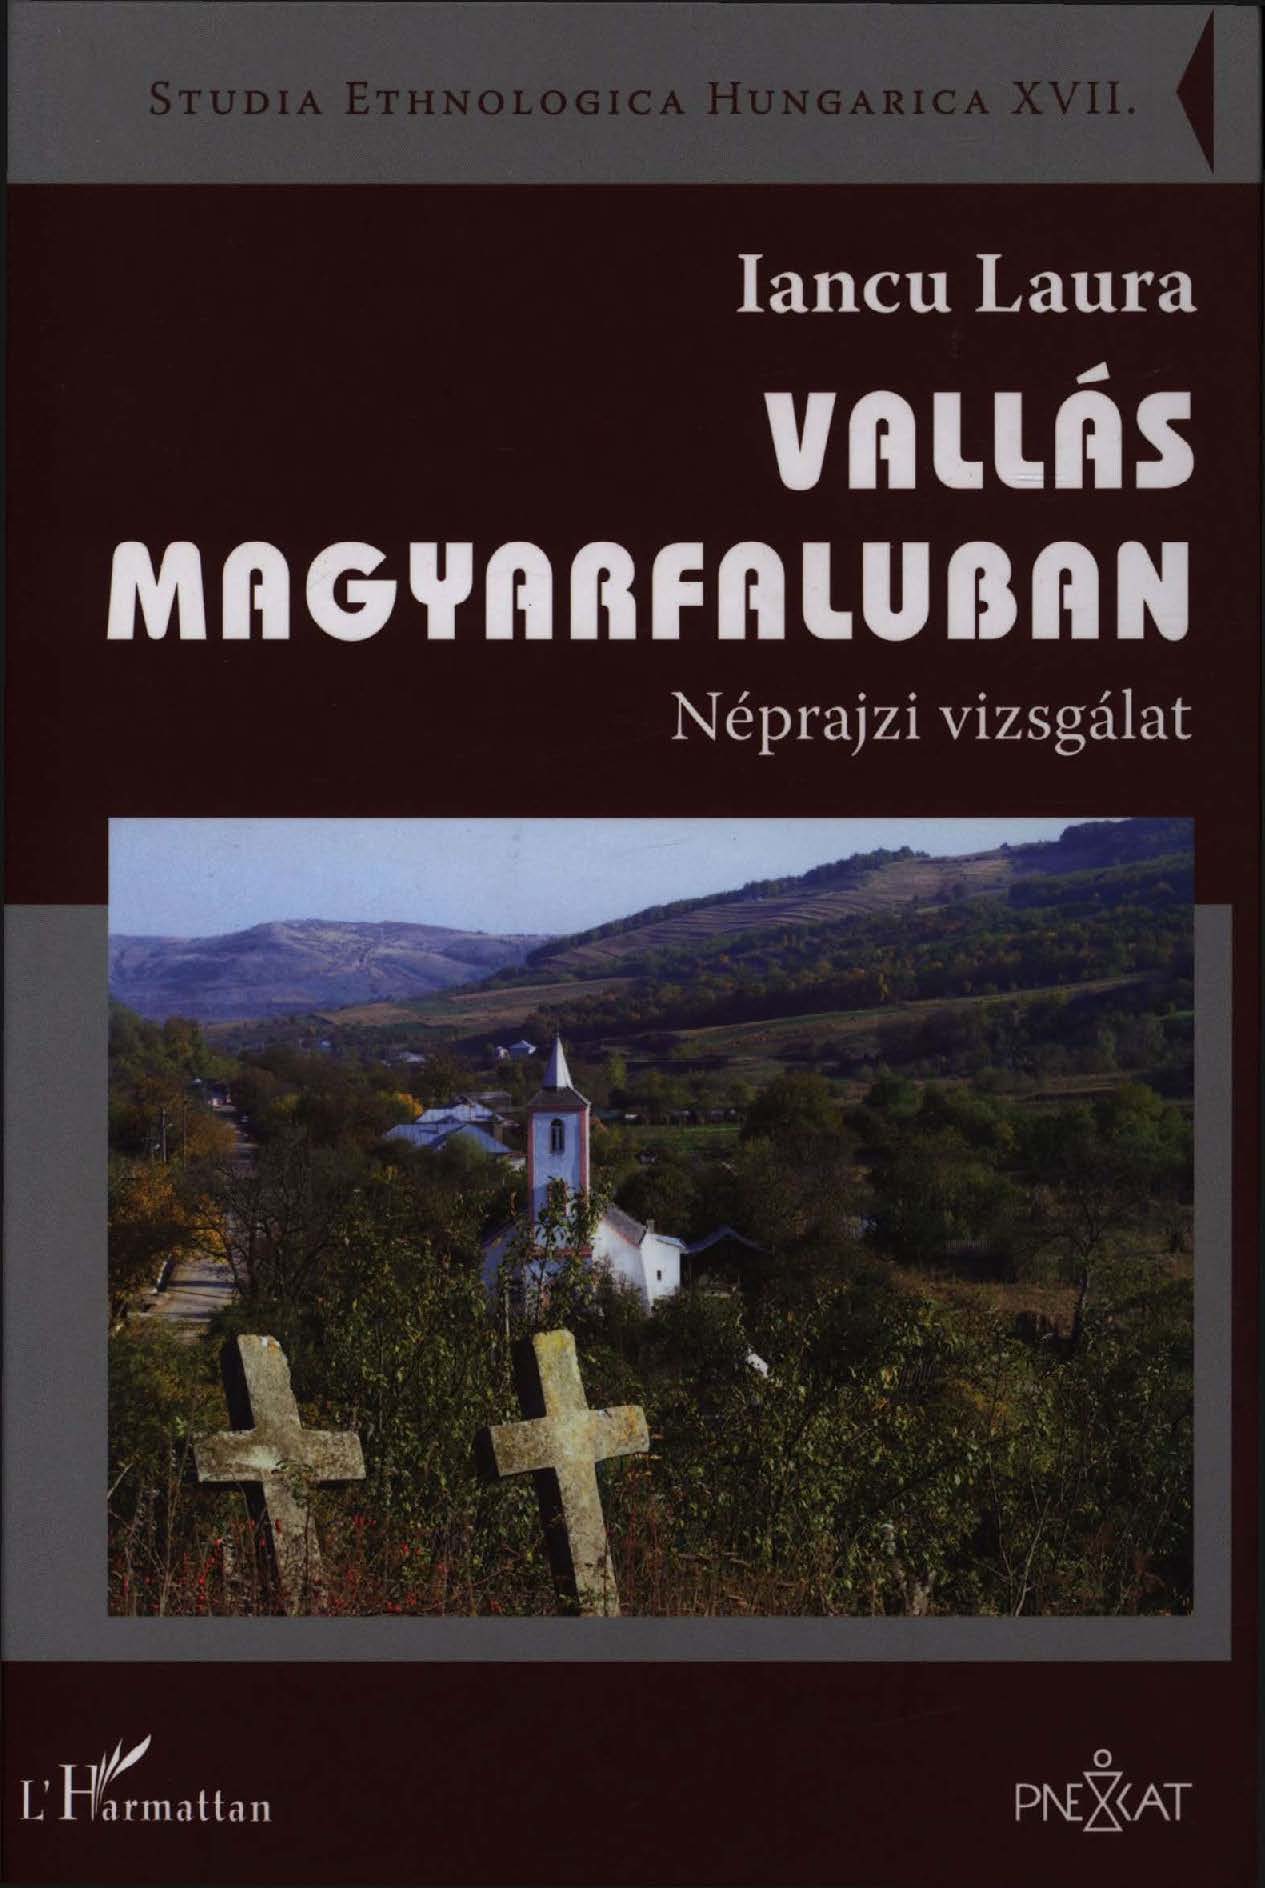 IANCU LAURA Valls Magyarfaluban STUD XVII cover